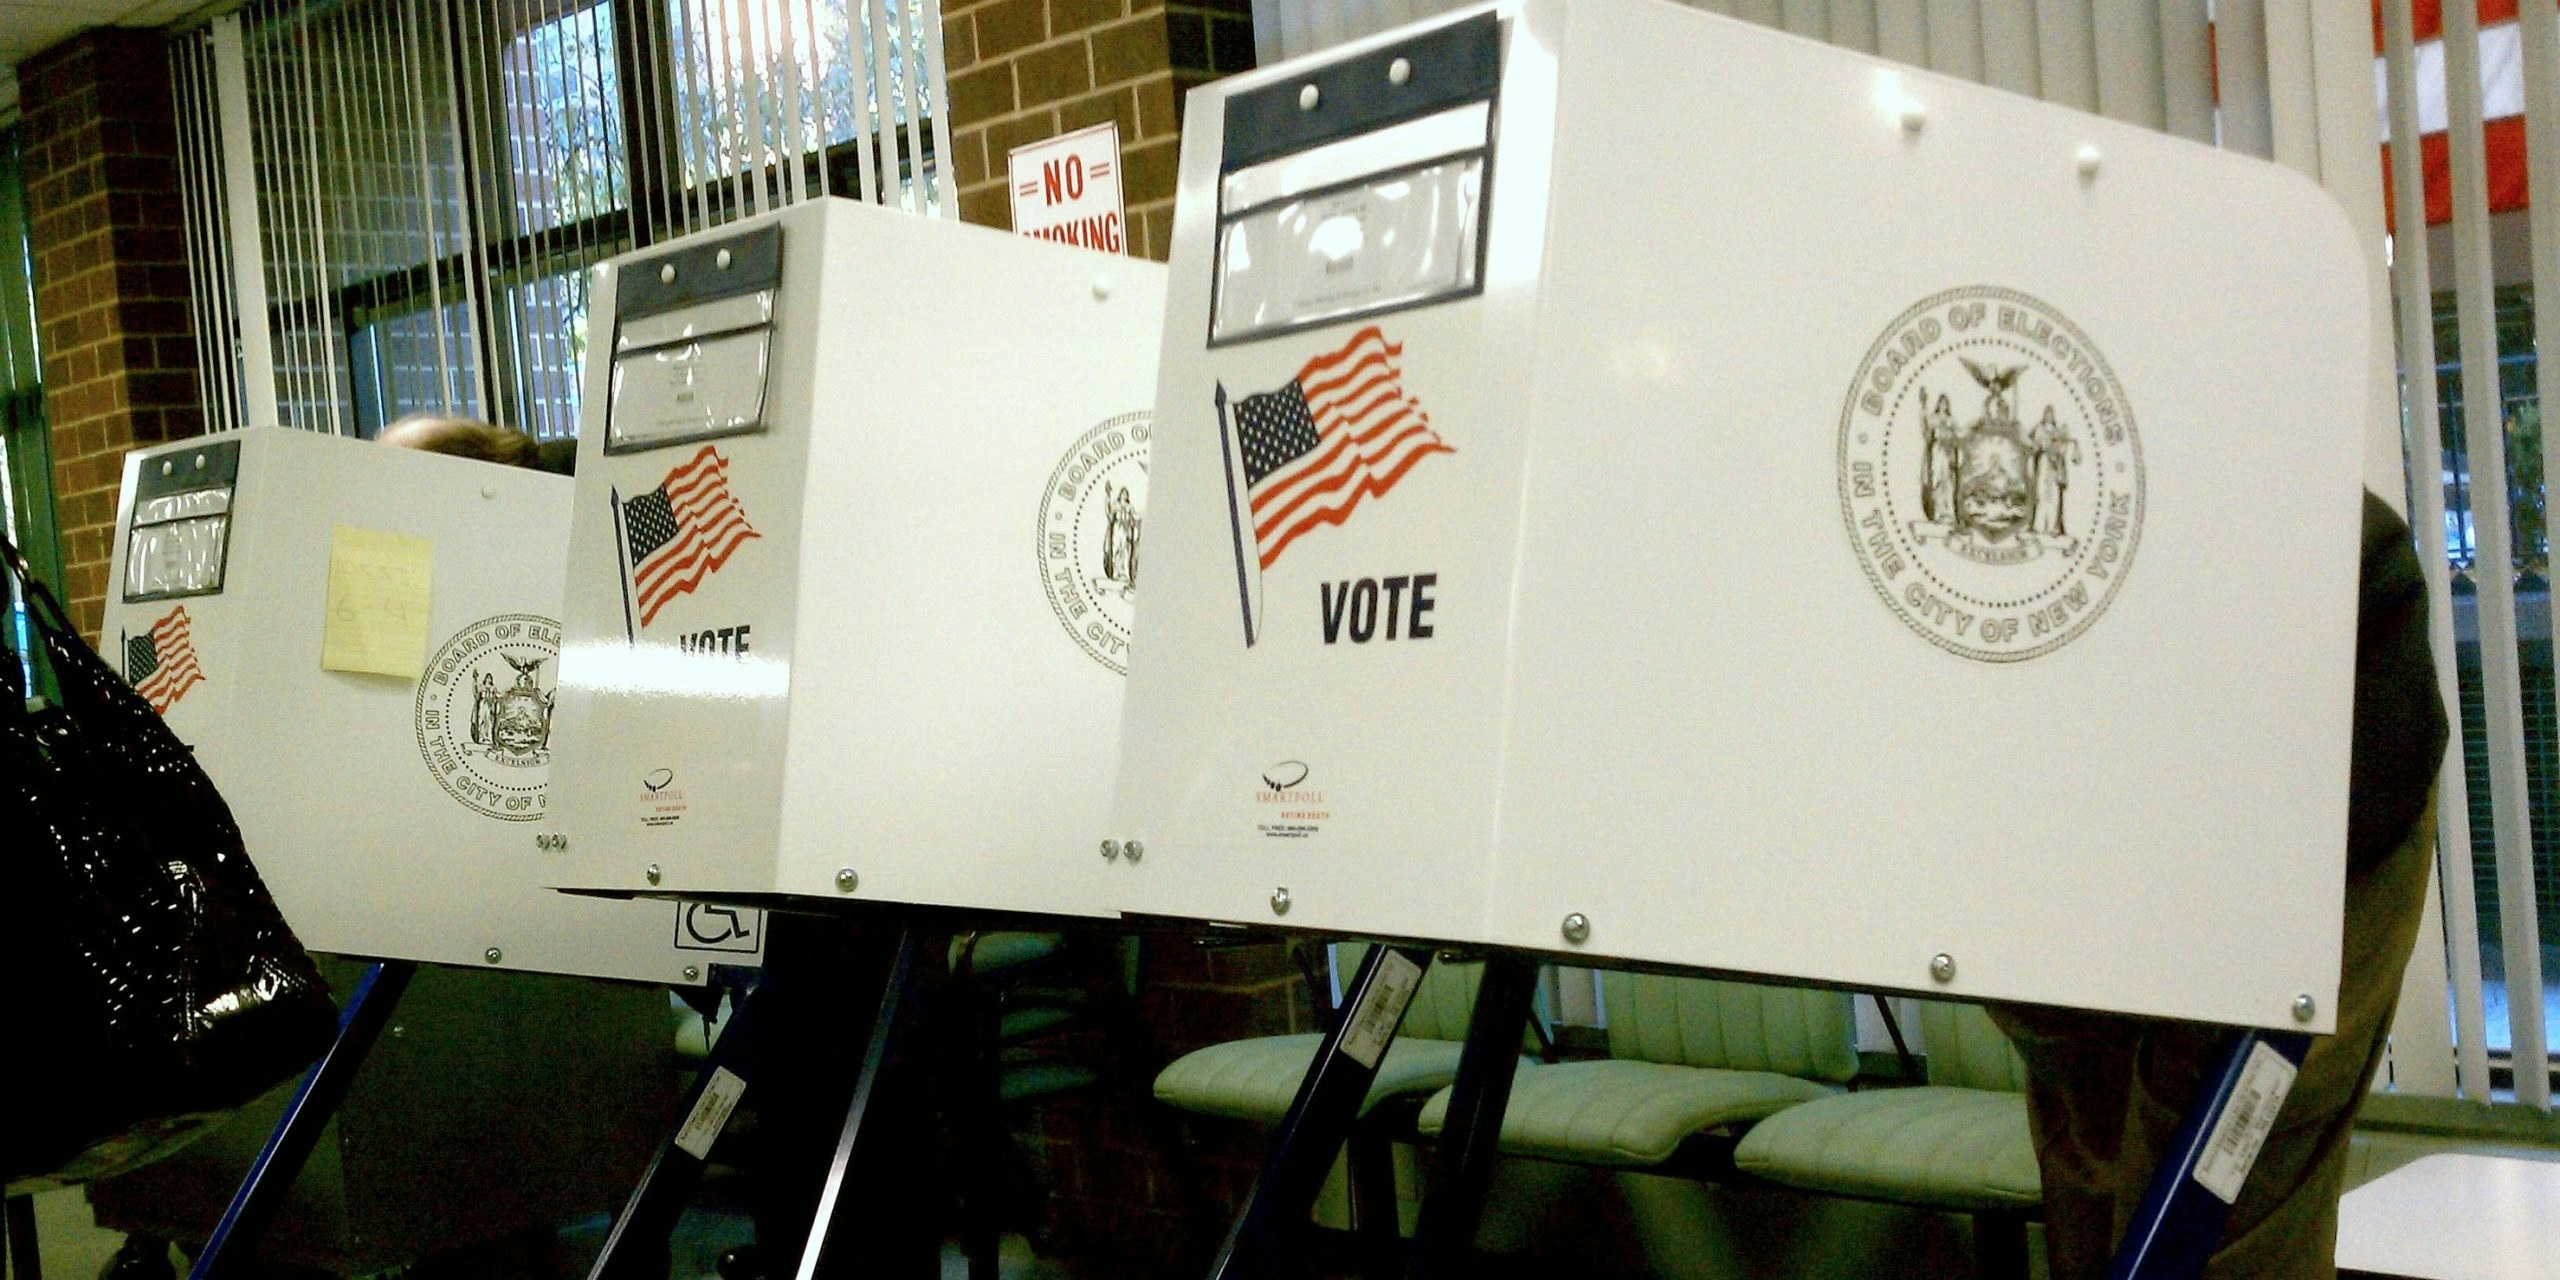 Voting systems. Dre voting Machine. Dominion voting Systems. Vote Machine. Voting Machine vendor Dominion 2020.